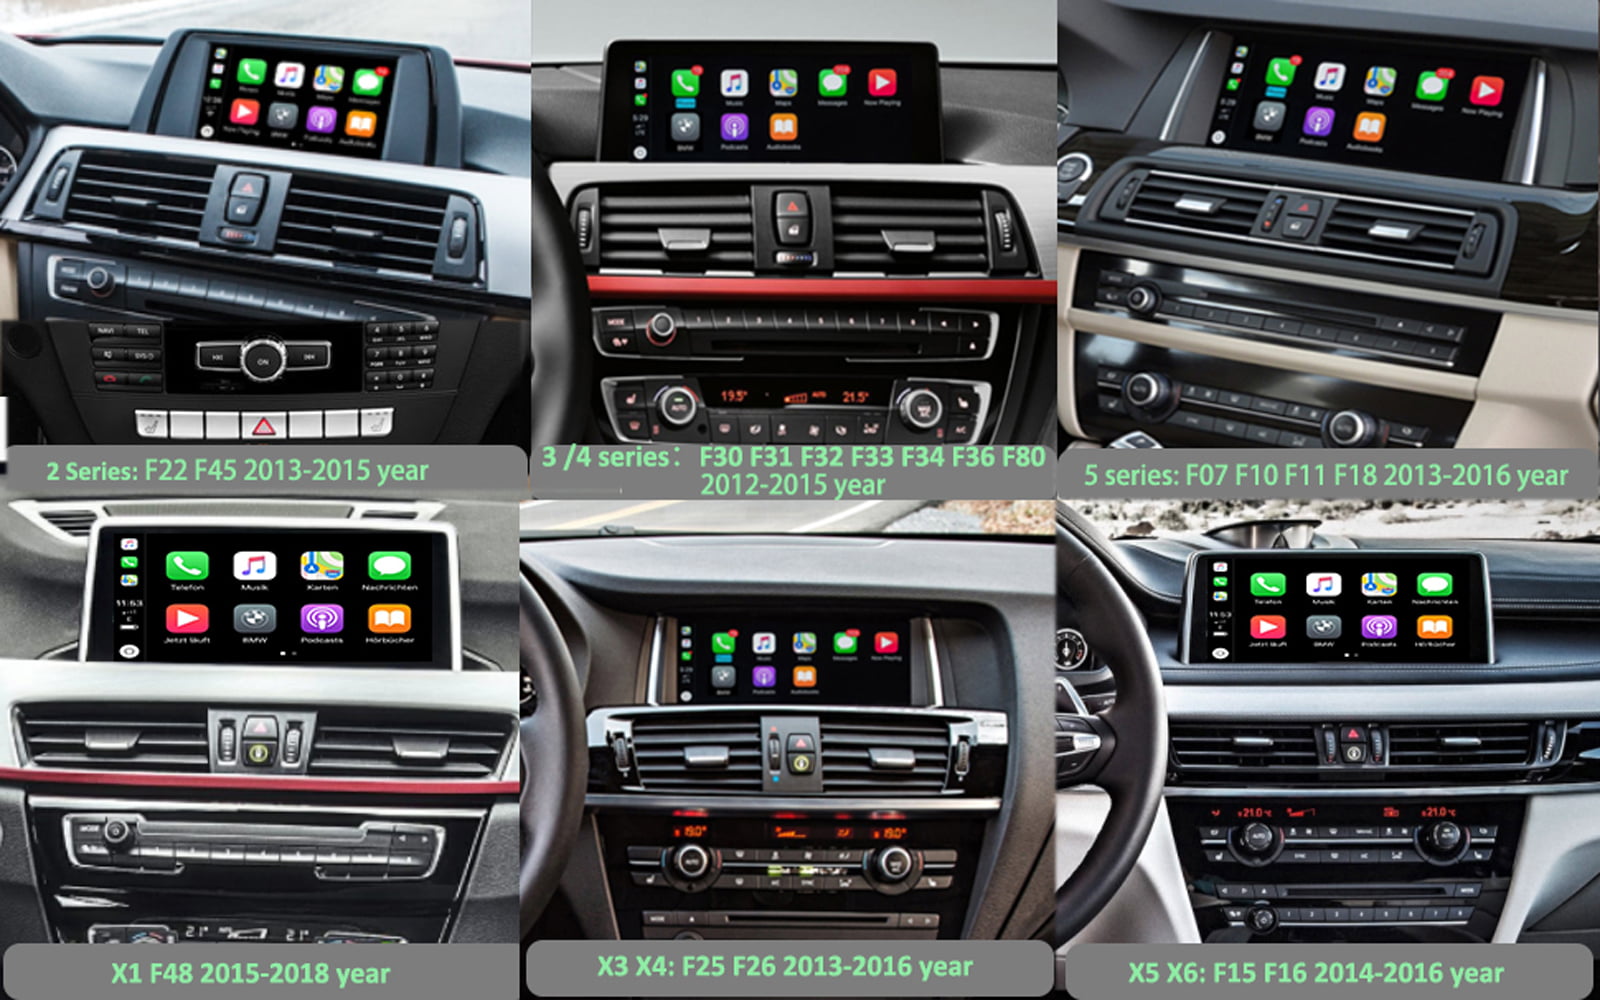 Wireless carplay interface für bmw nbt f20 f21 f23 f30 f31 f32 f33 f34 f36  f10 f11 f01 f48 f15 f56 f25 android auto spielen